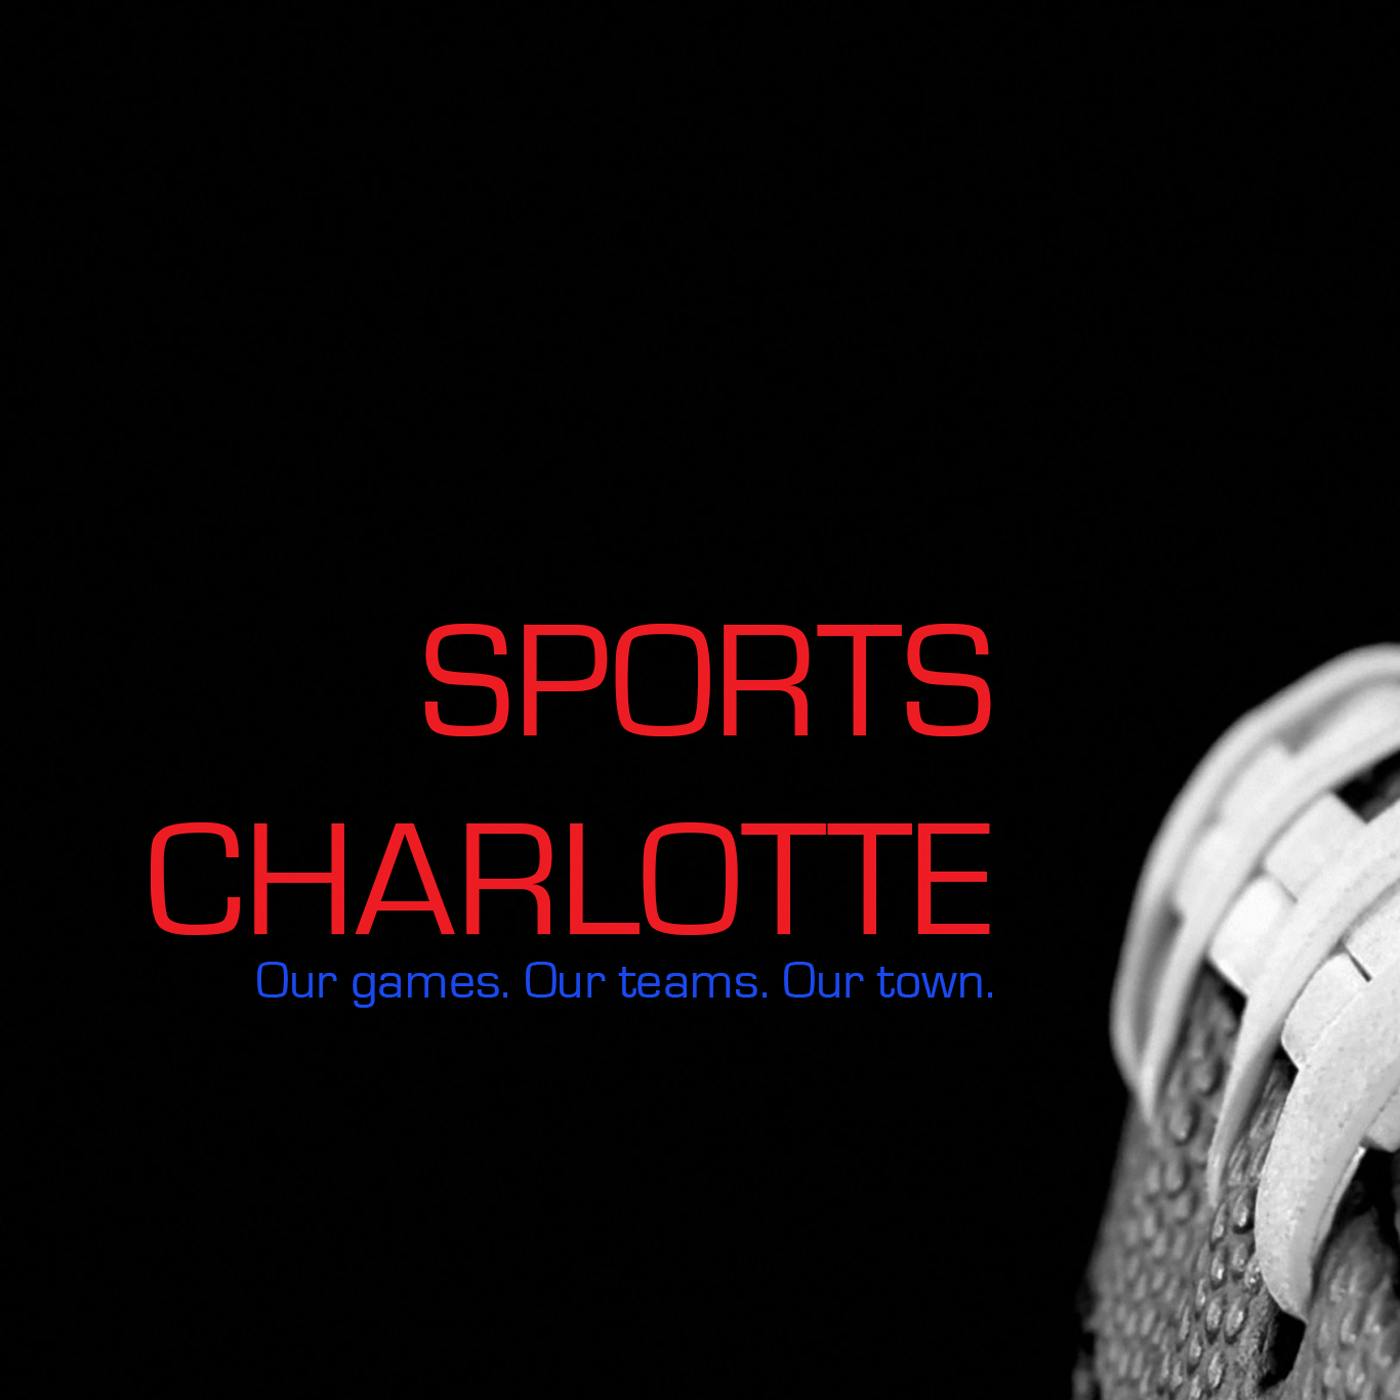 Chris Clunie | About Davidson Athletics